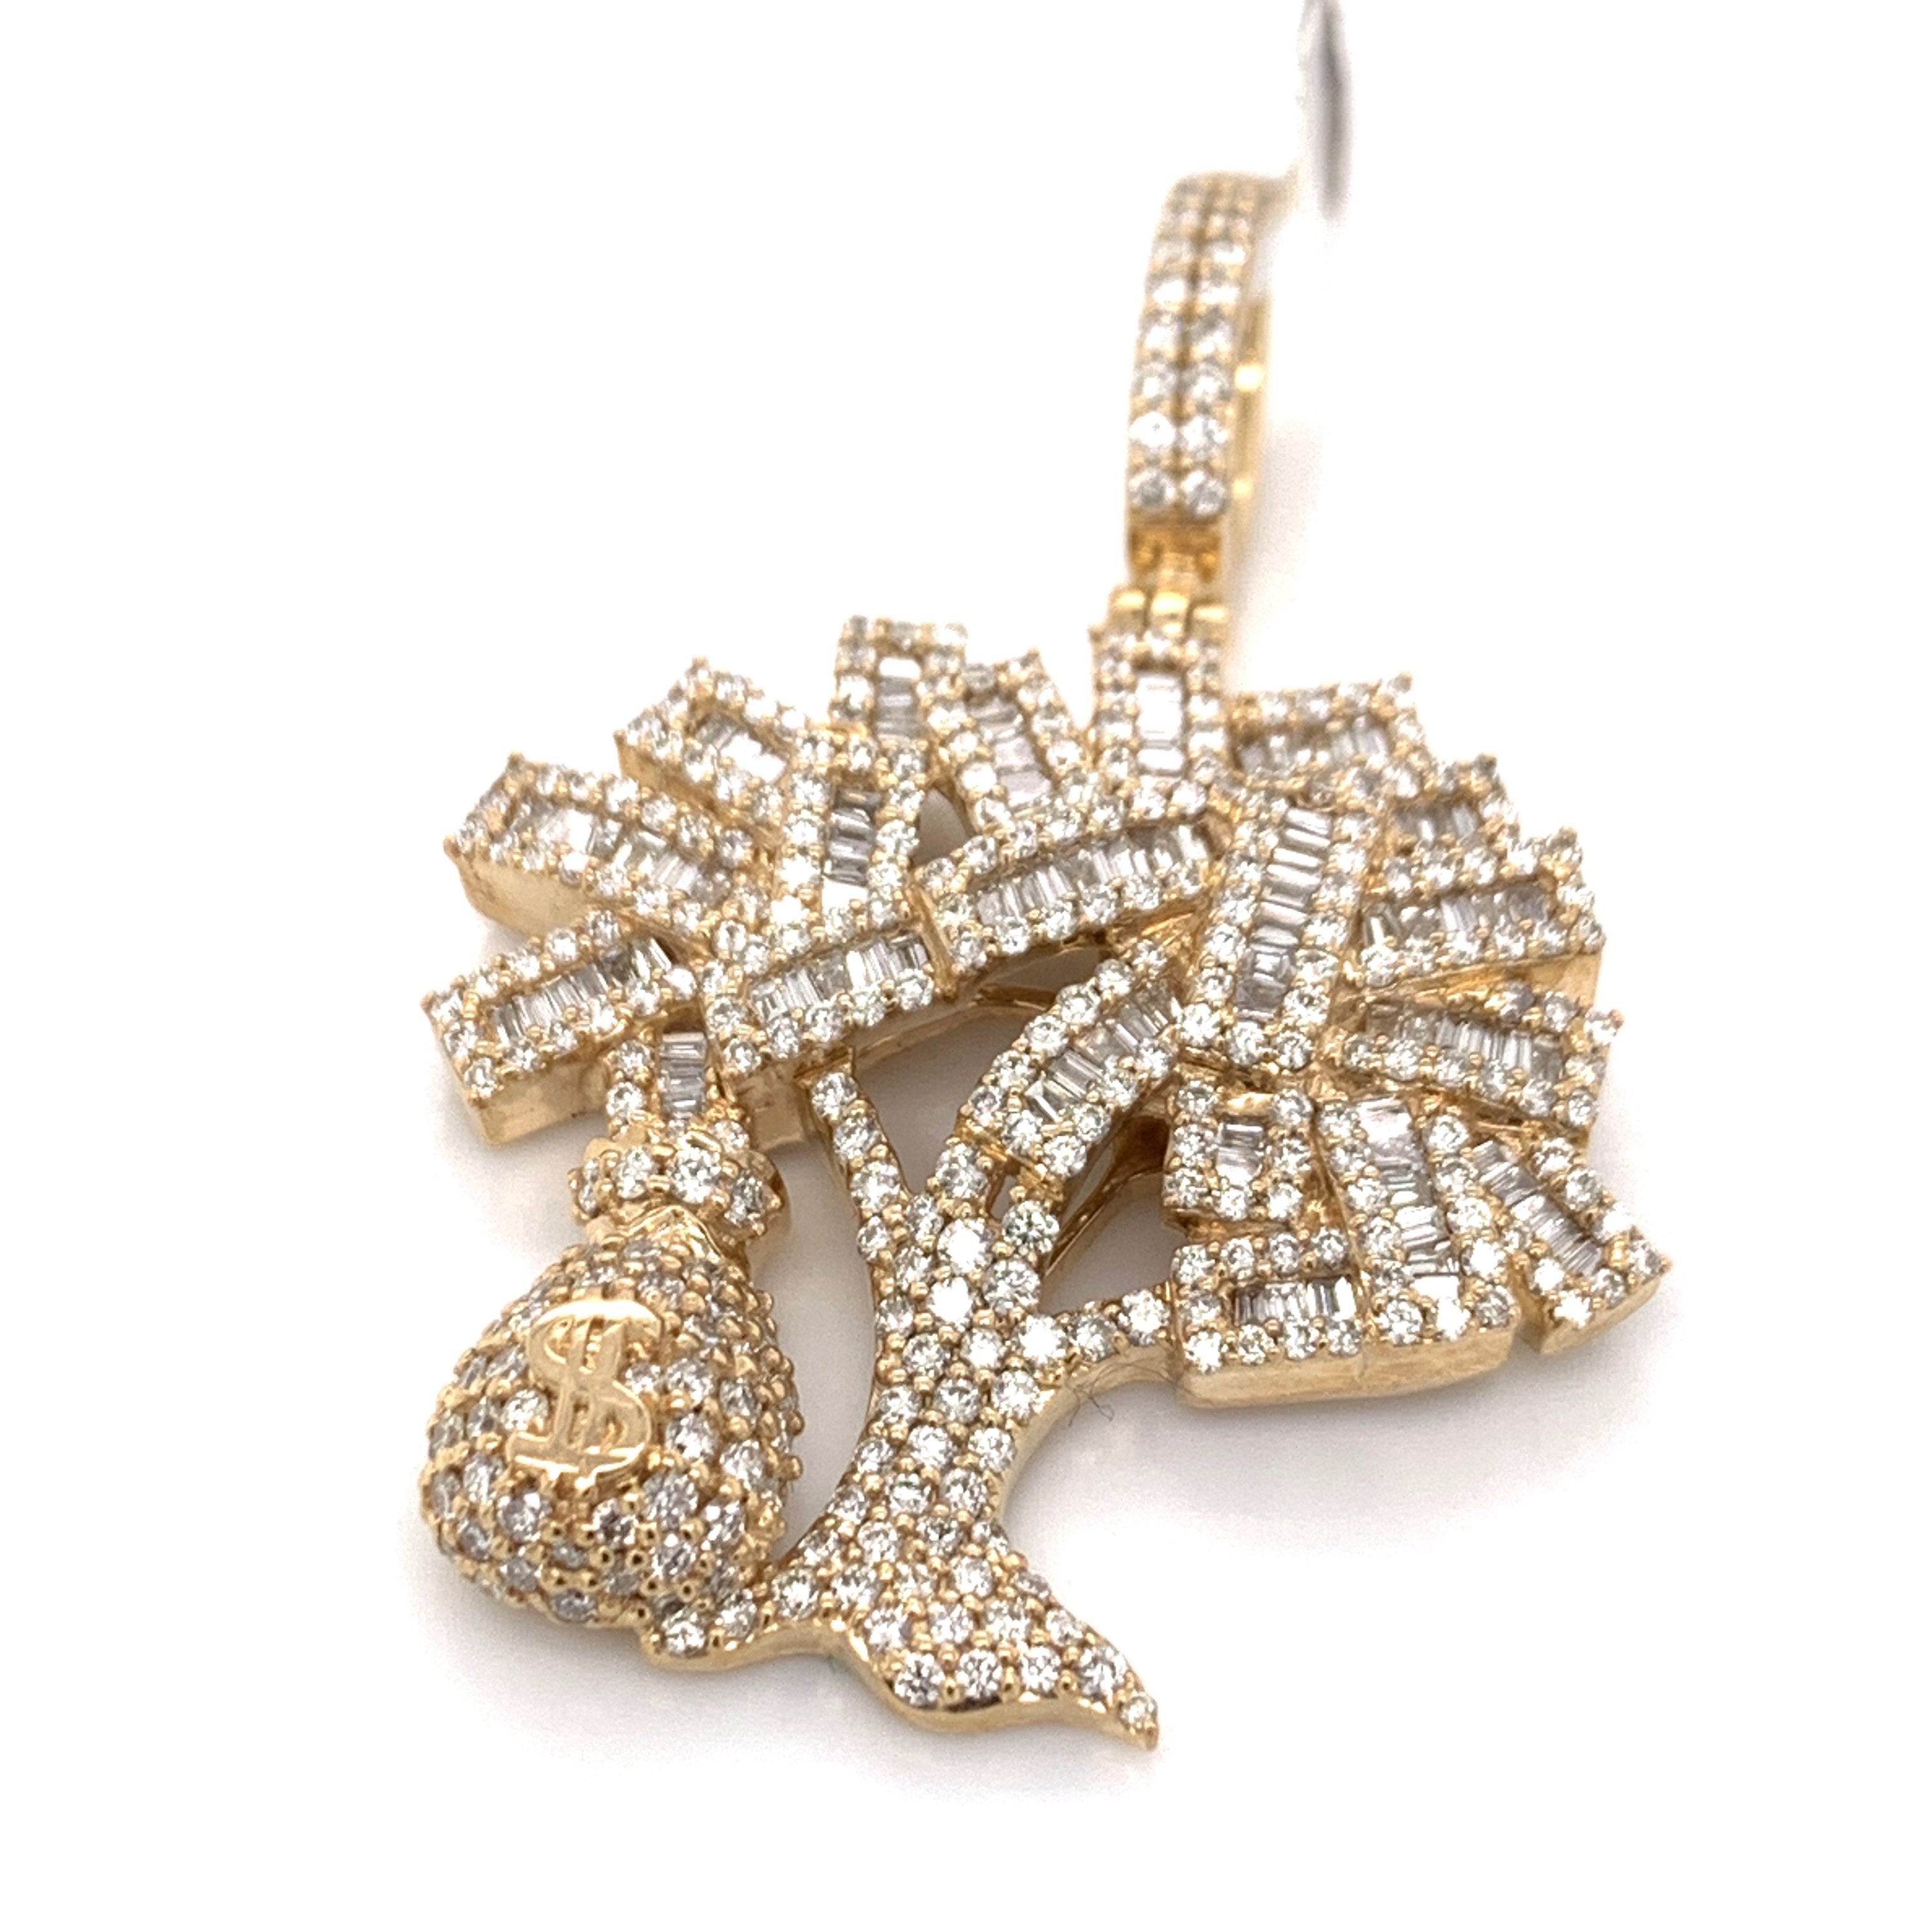 2.50 CT. Diamond Money Tree Pendant in 10KT Gold - White Carat Diamonds 